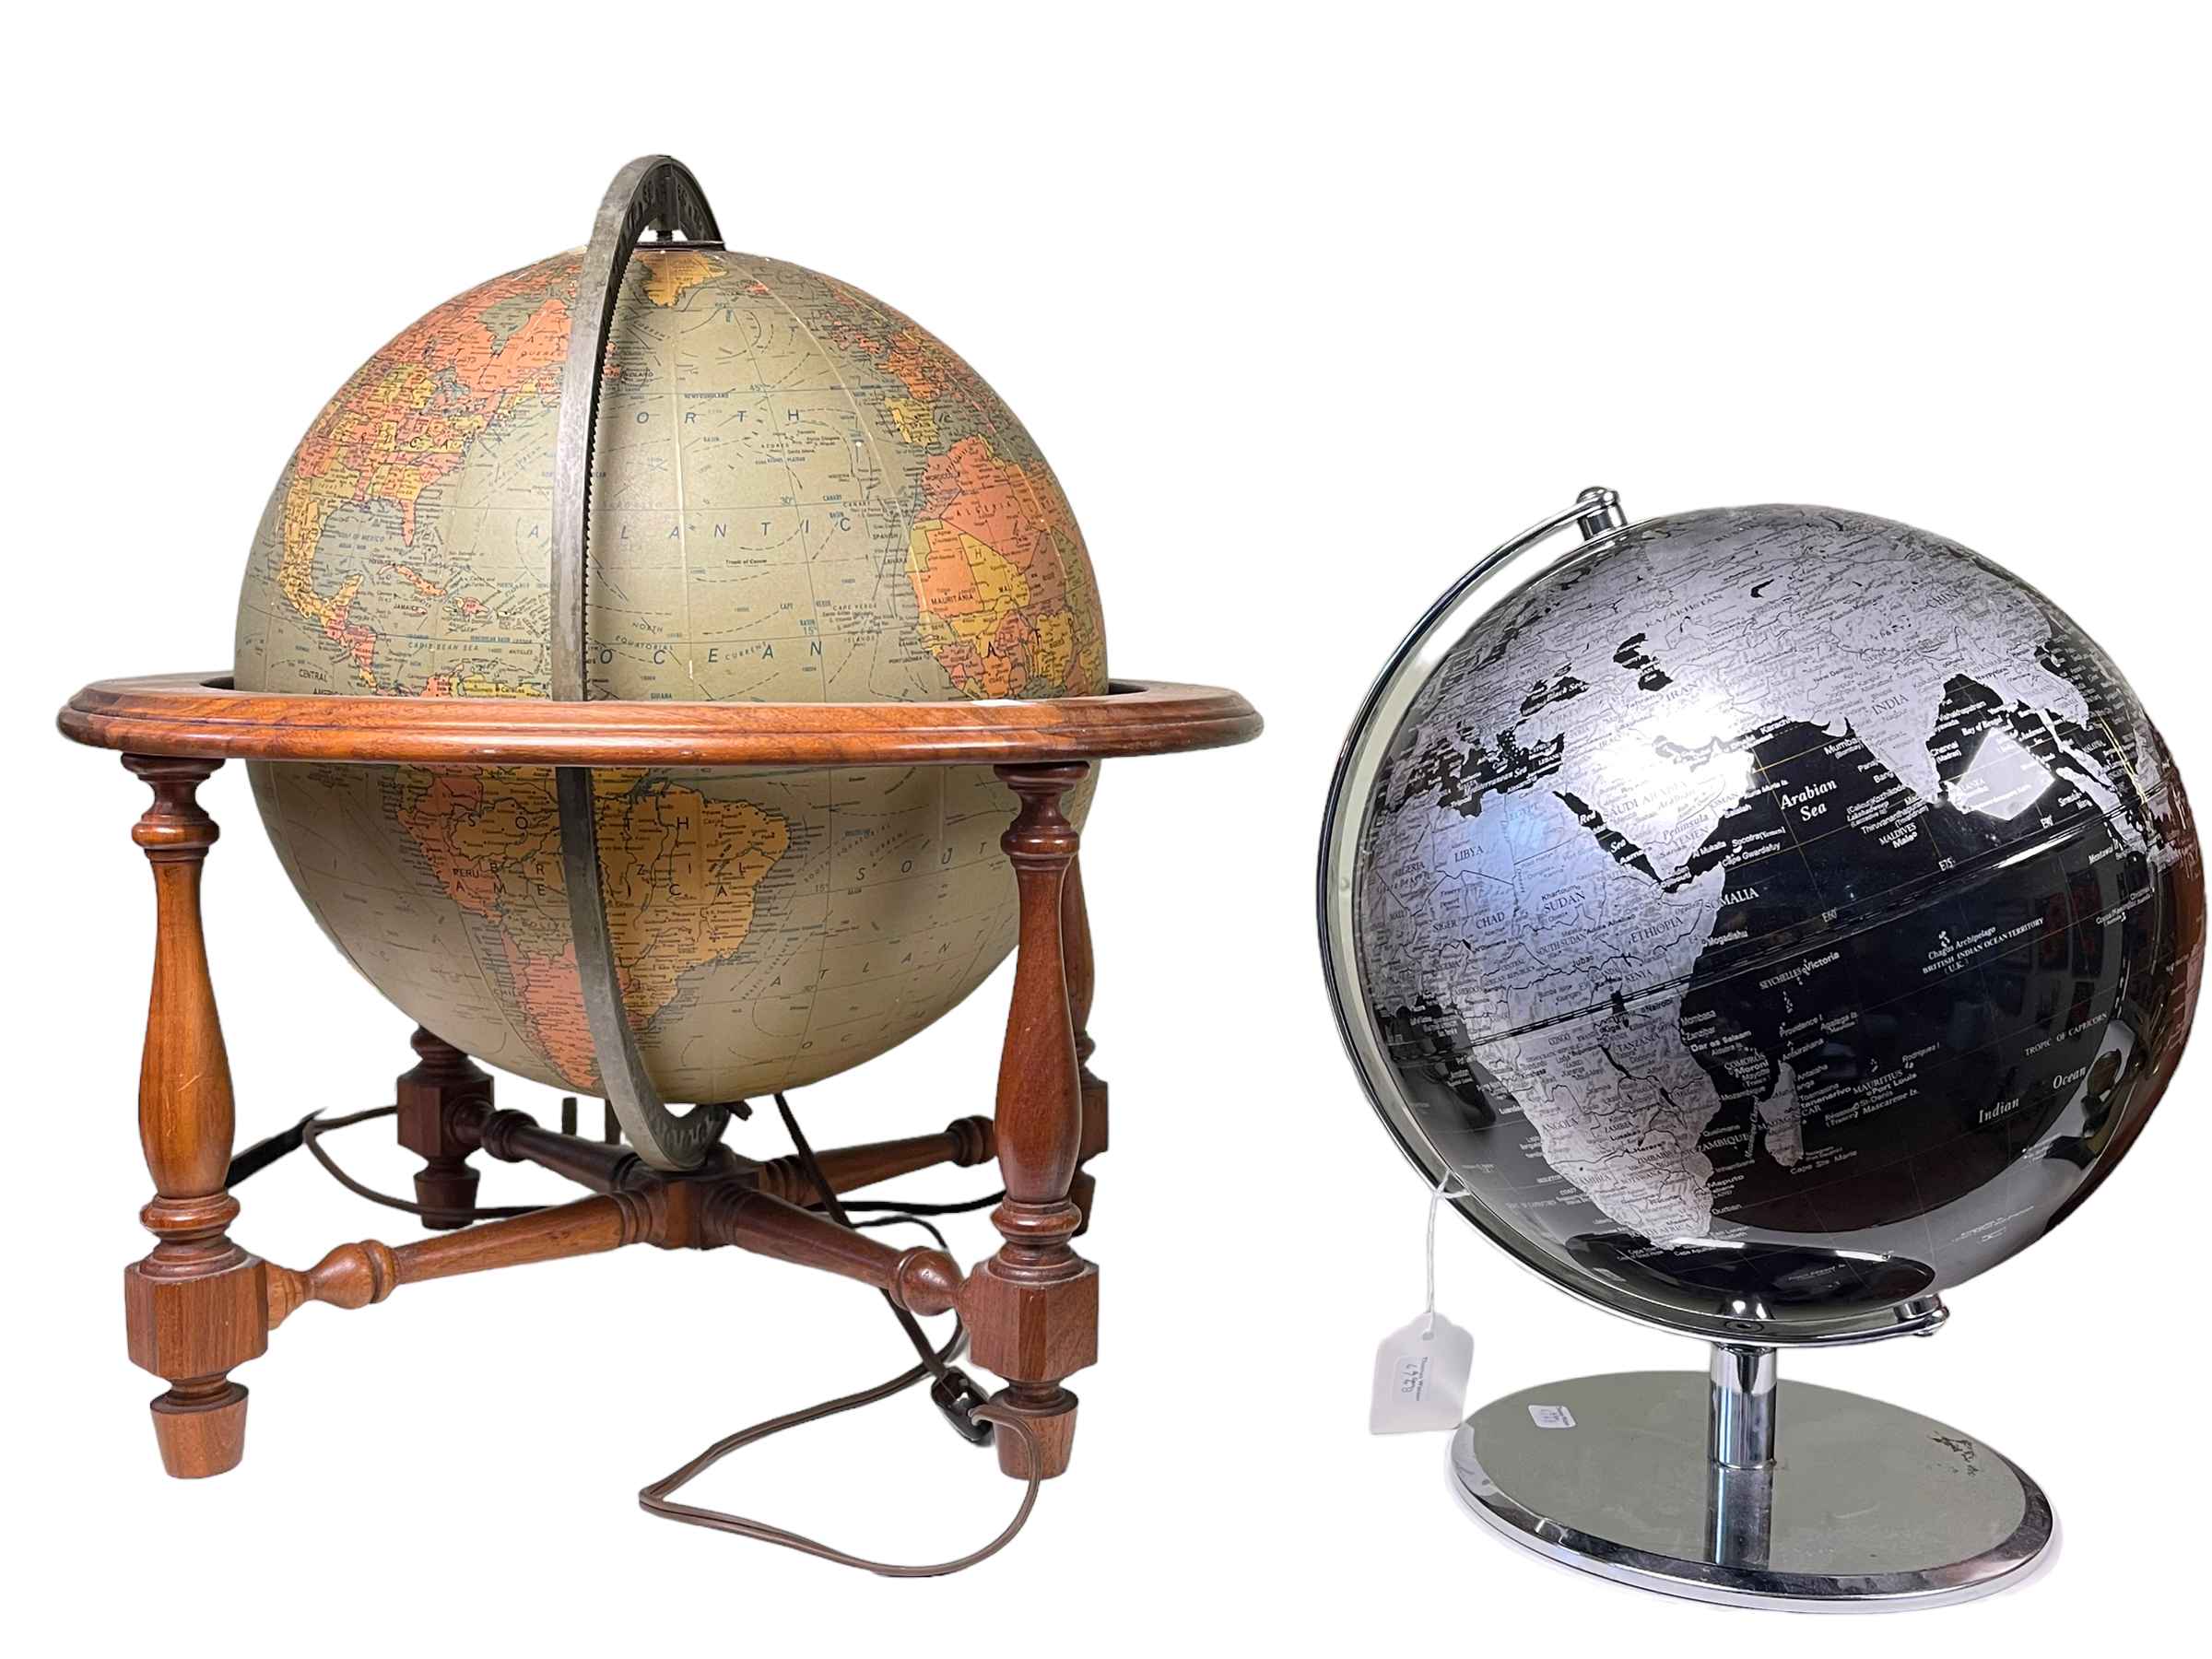 Illuminated globe on mahogany stand and black and silvered globe on chrome stand.